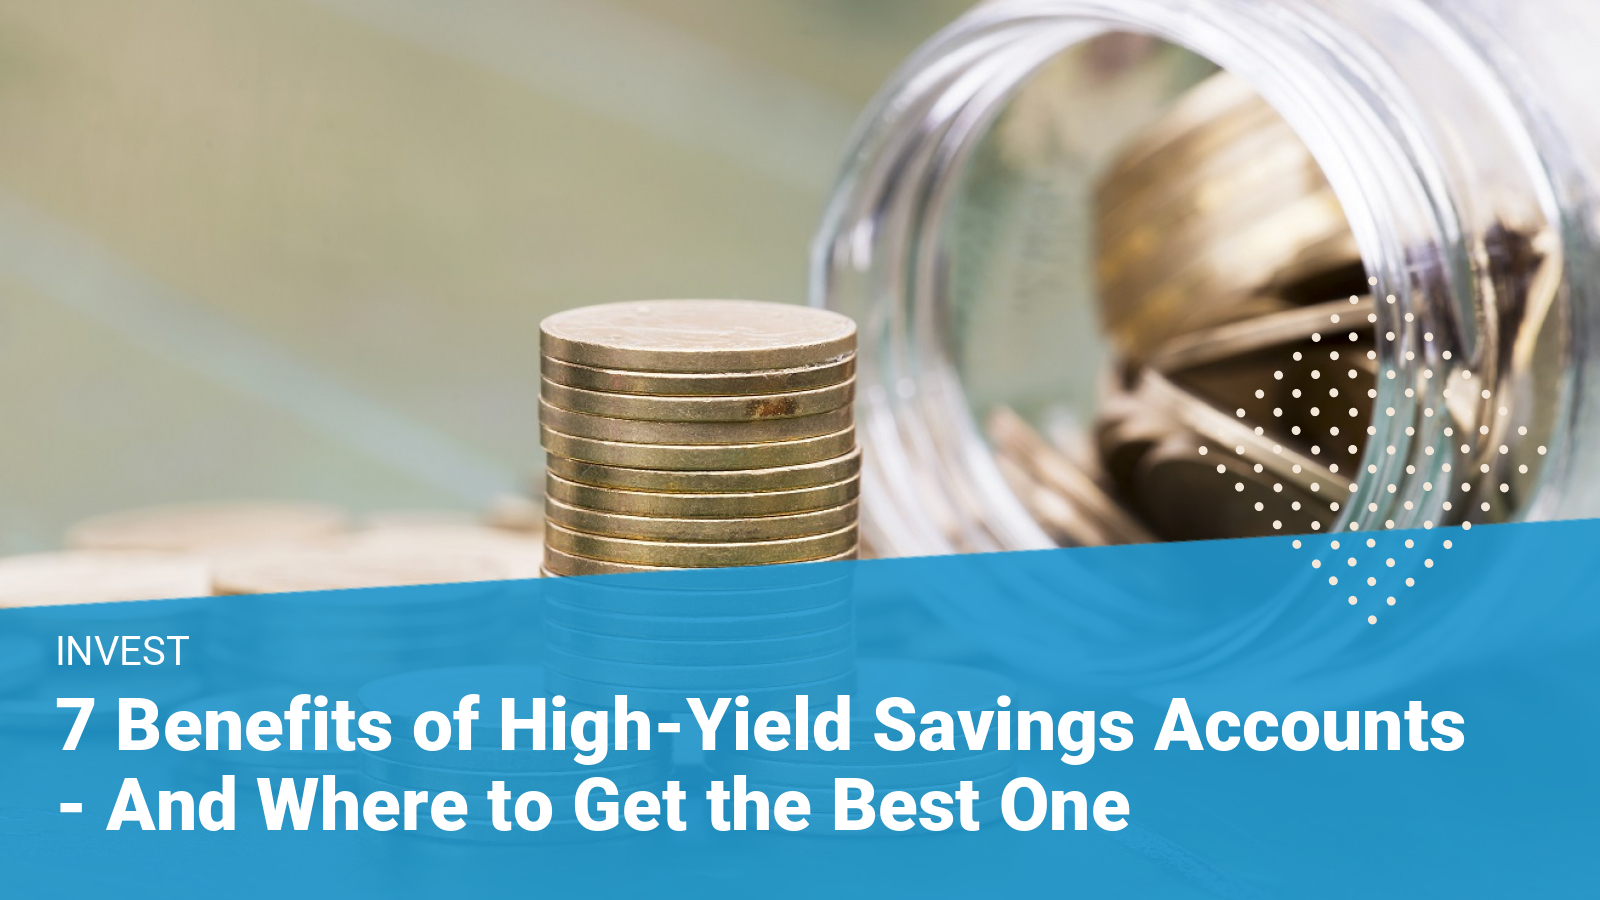 High-Yield Savings Accounts Benefits